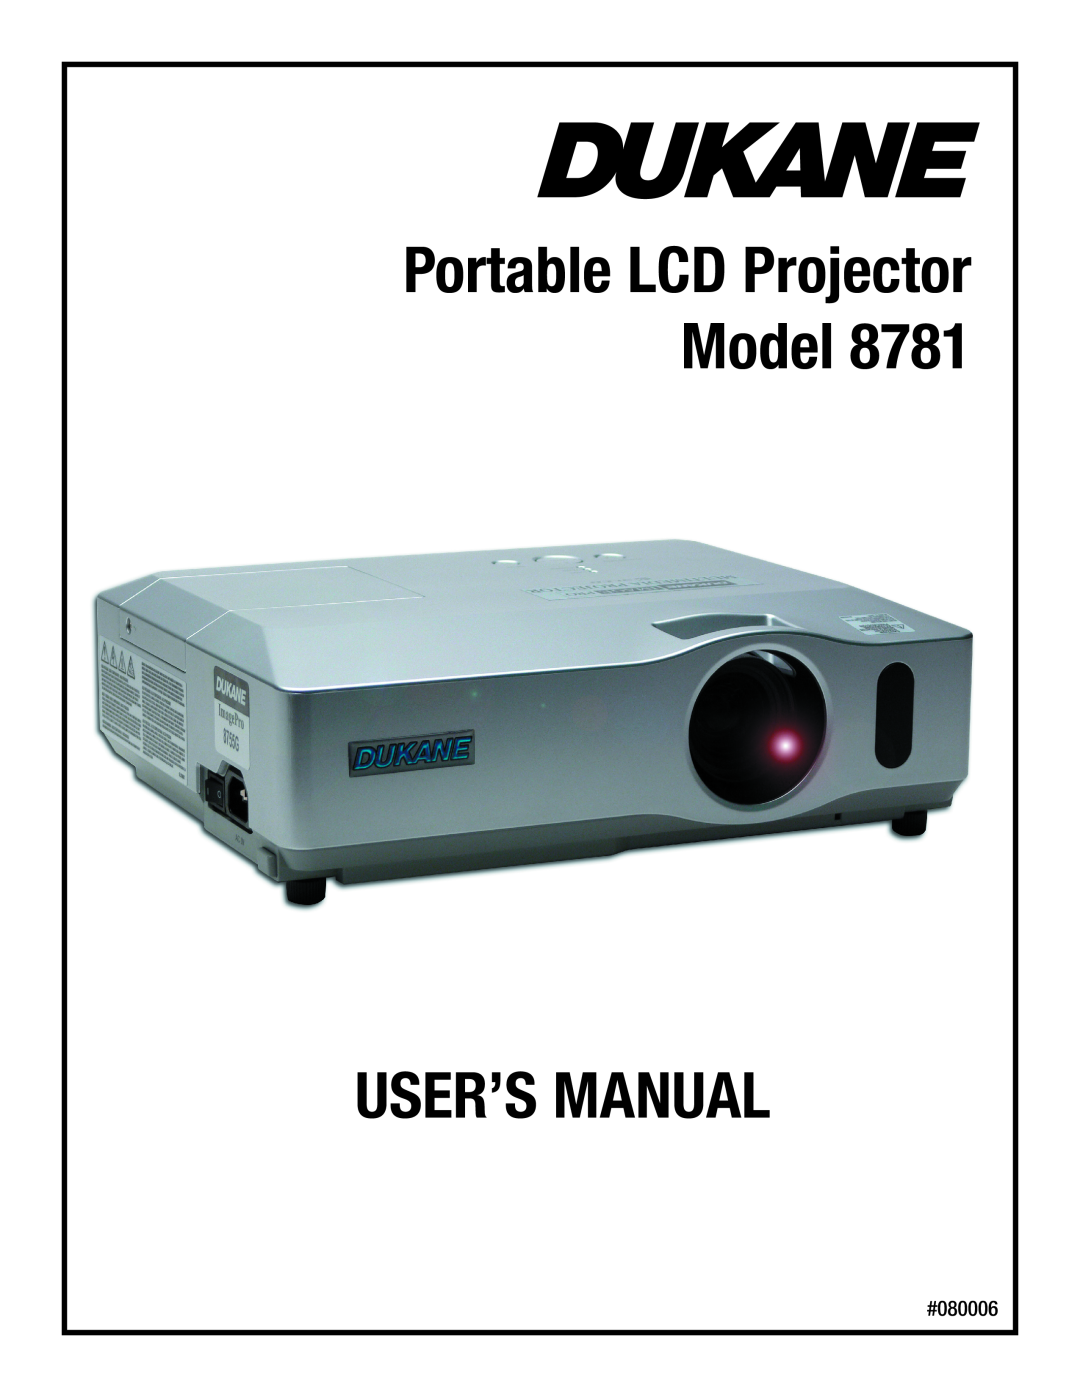 Dukane manual ImagePro 8781 Portable LCD Projector 